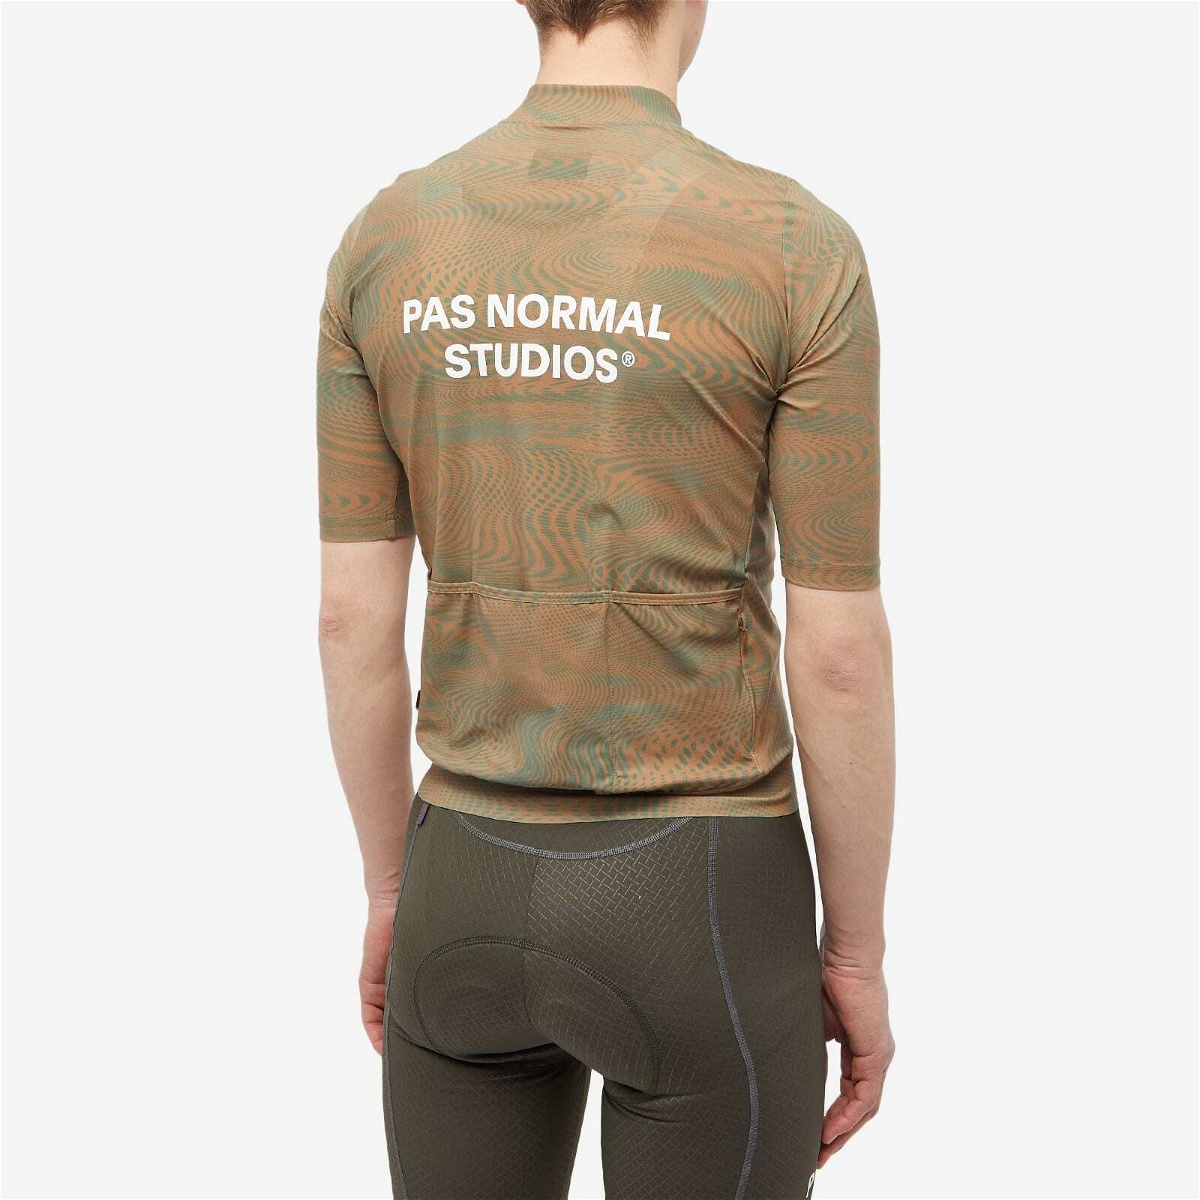 Pas Normal Studios Men's Essential Jersey in Earth Psych Pas Normal Studios